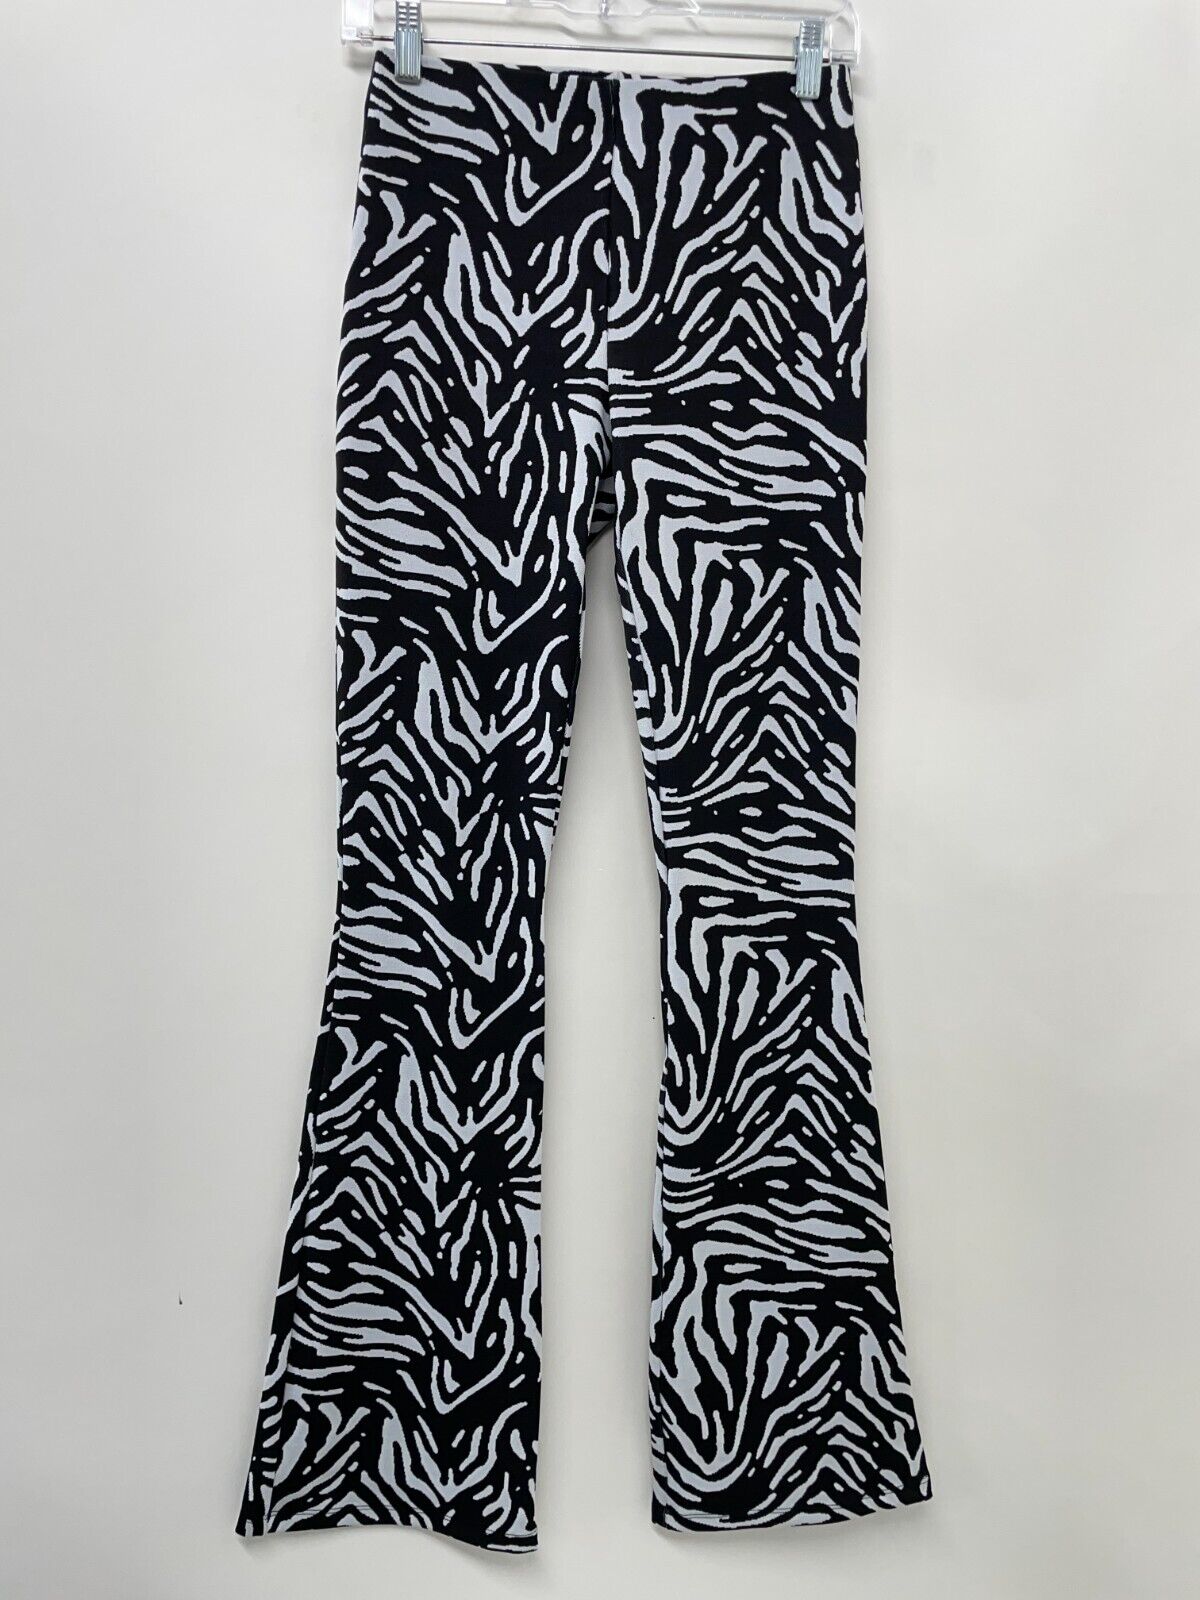 Zara Womens S Flared Jacquard Trouser Pant Black White Animal Print 5039/613/064